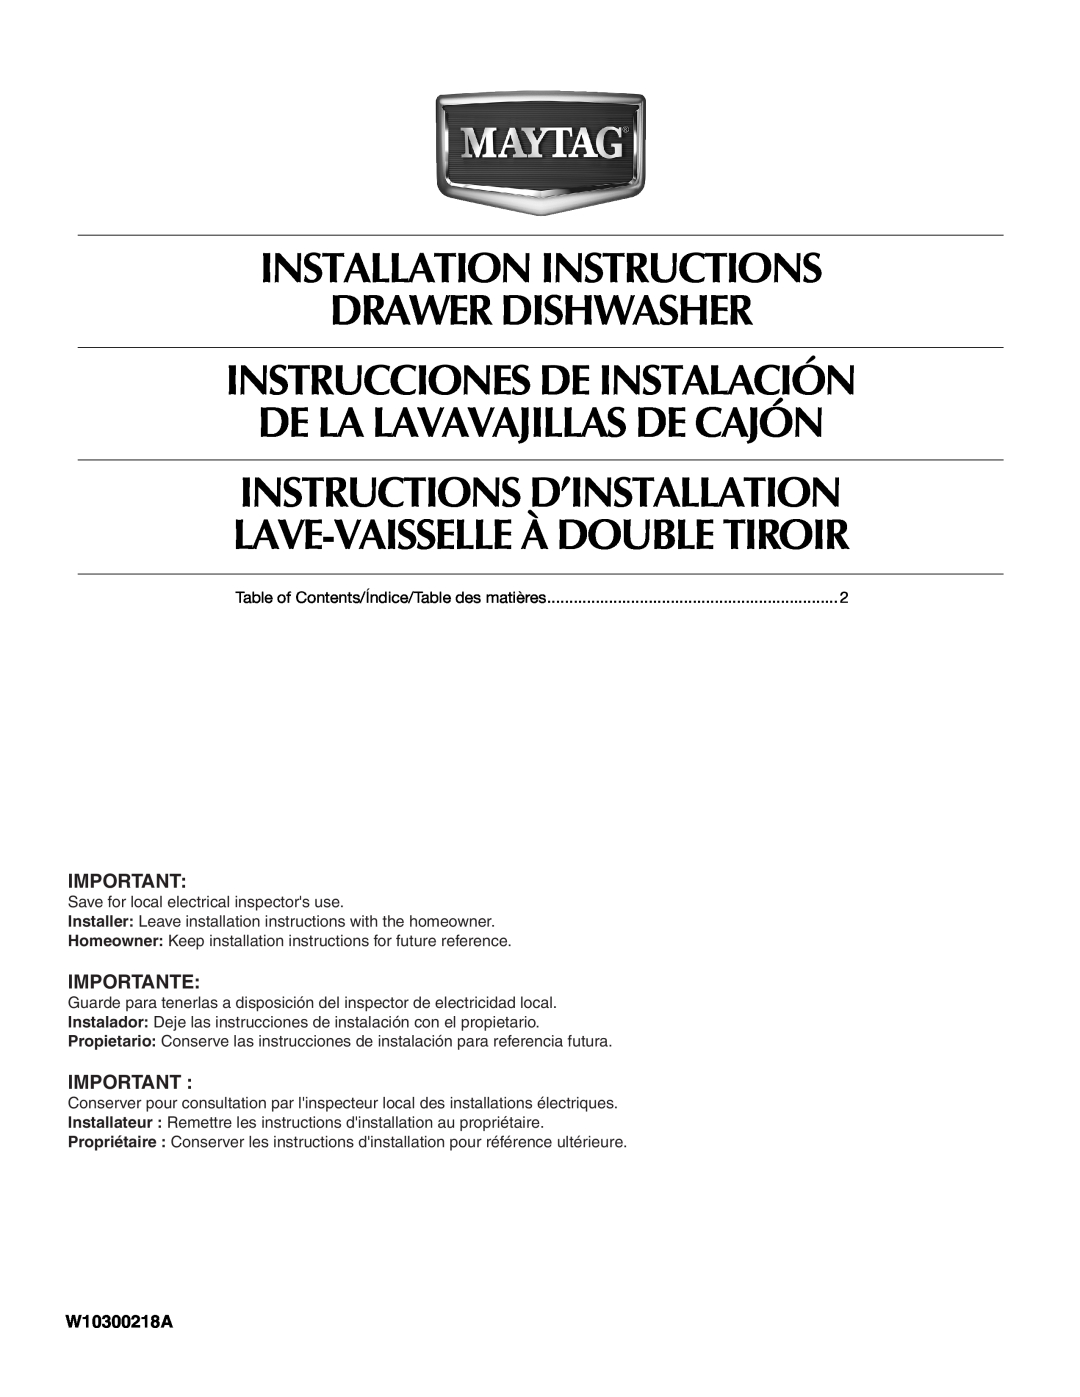 Maytag W10300218A installation instructions Installation Instructions Drawer Dishwasher, Instrucciones De Instalación 